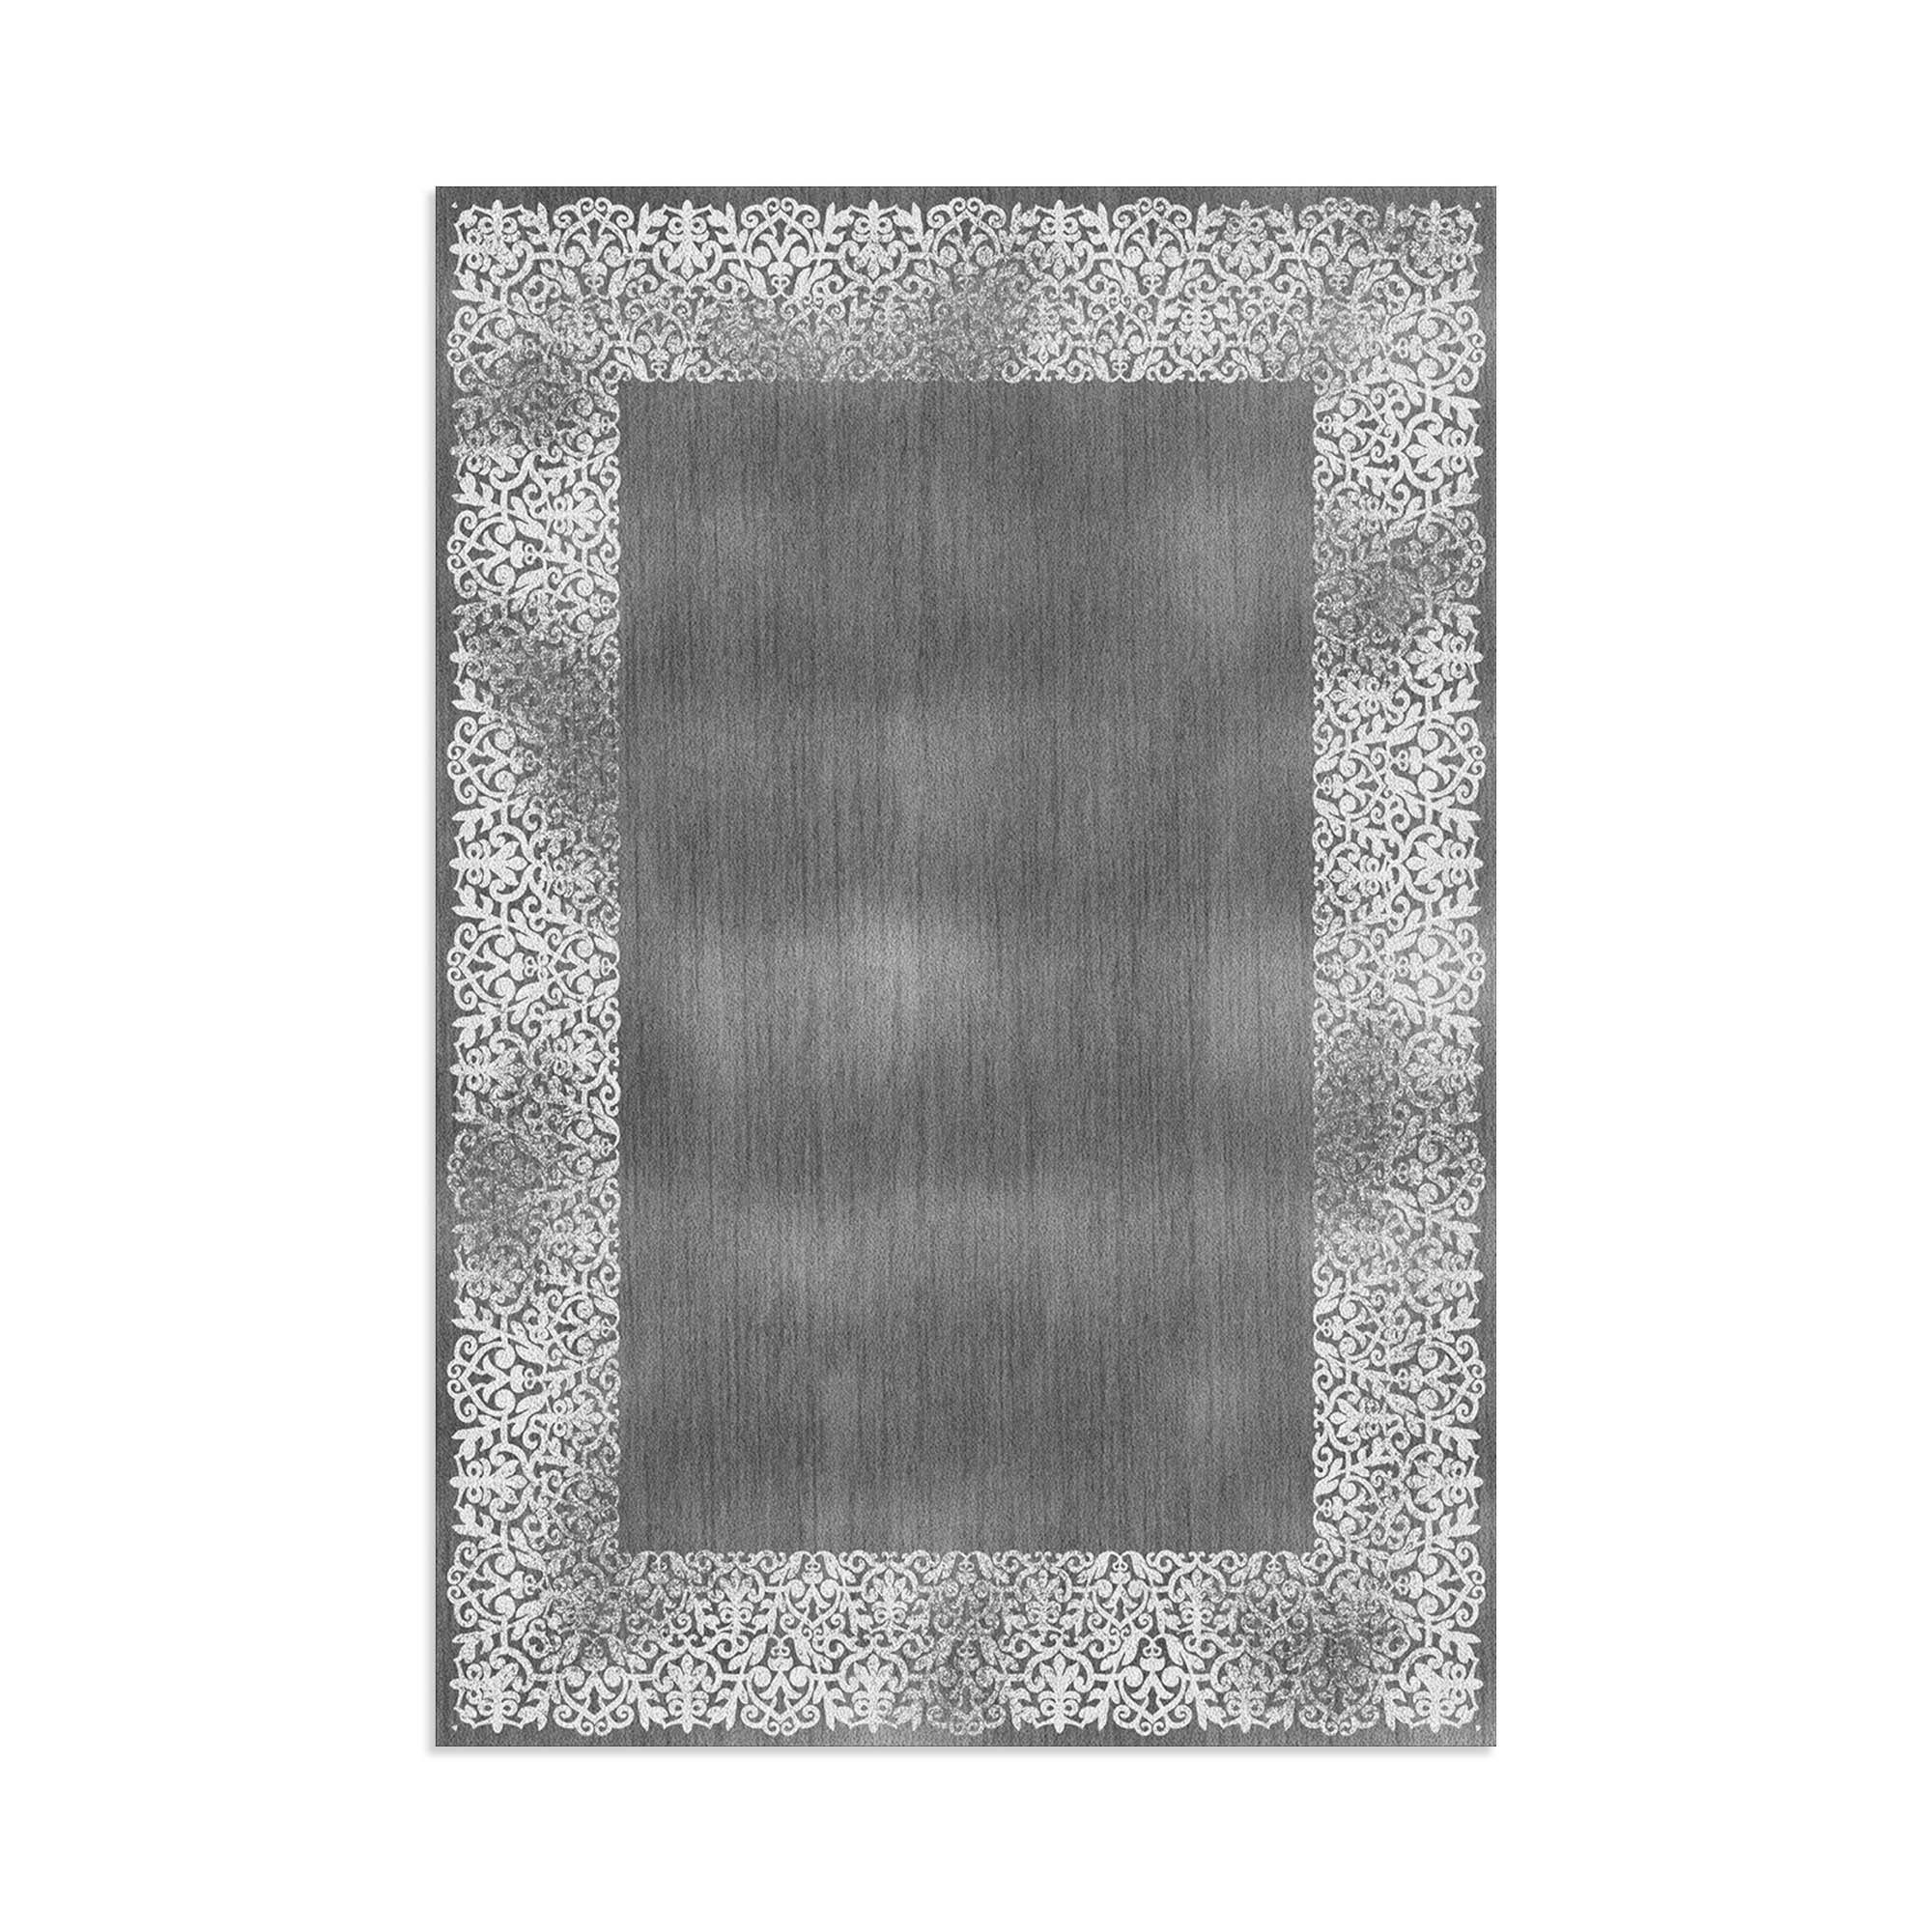 Teppich Klassisch Flachteppich Textilien, Universell mm, 6x in Waschmaschinengeeignet Fußbodenheizungsgeeignet Läufer Grau Höhe: einsetzbar, 6 Größen, Jungengel